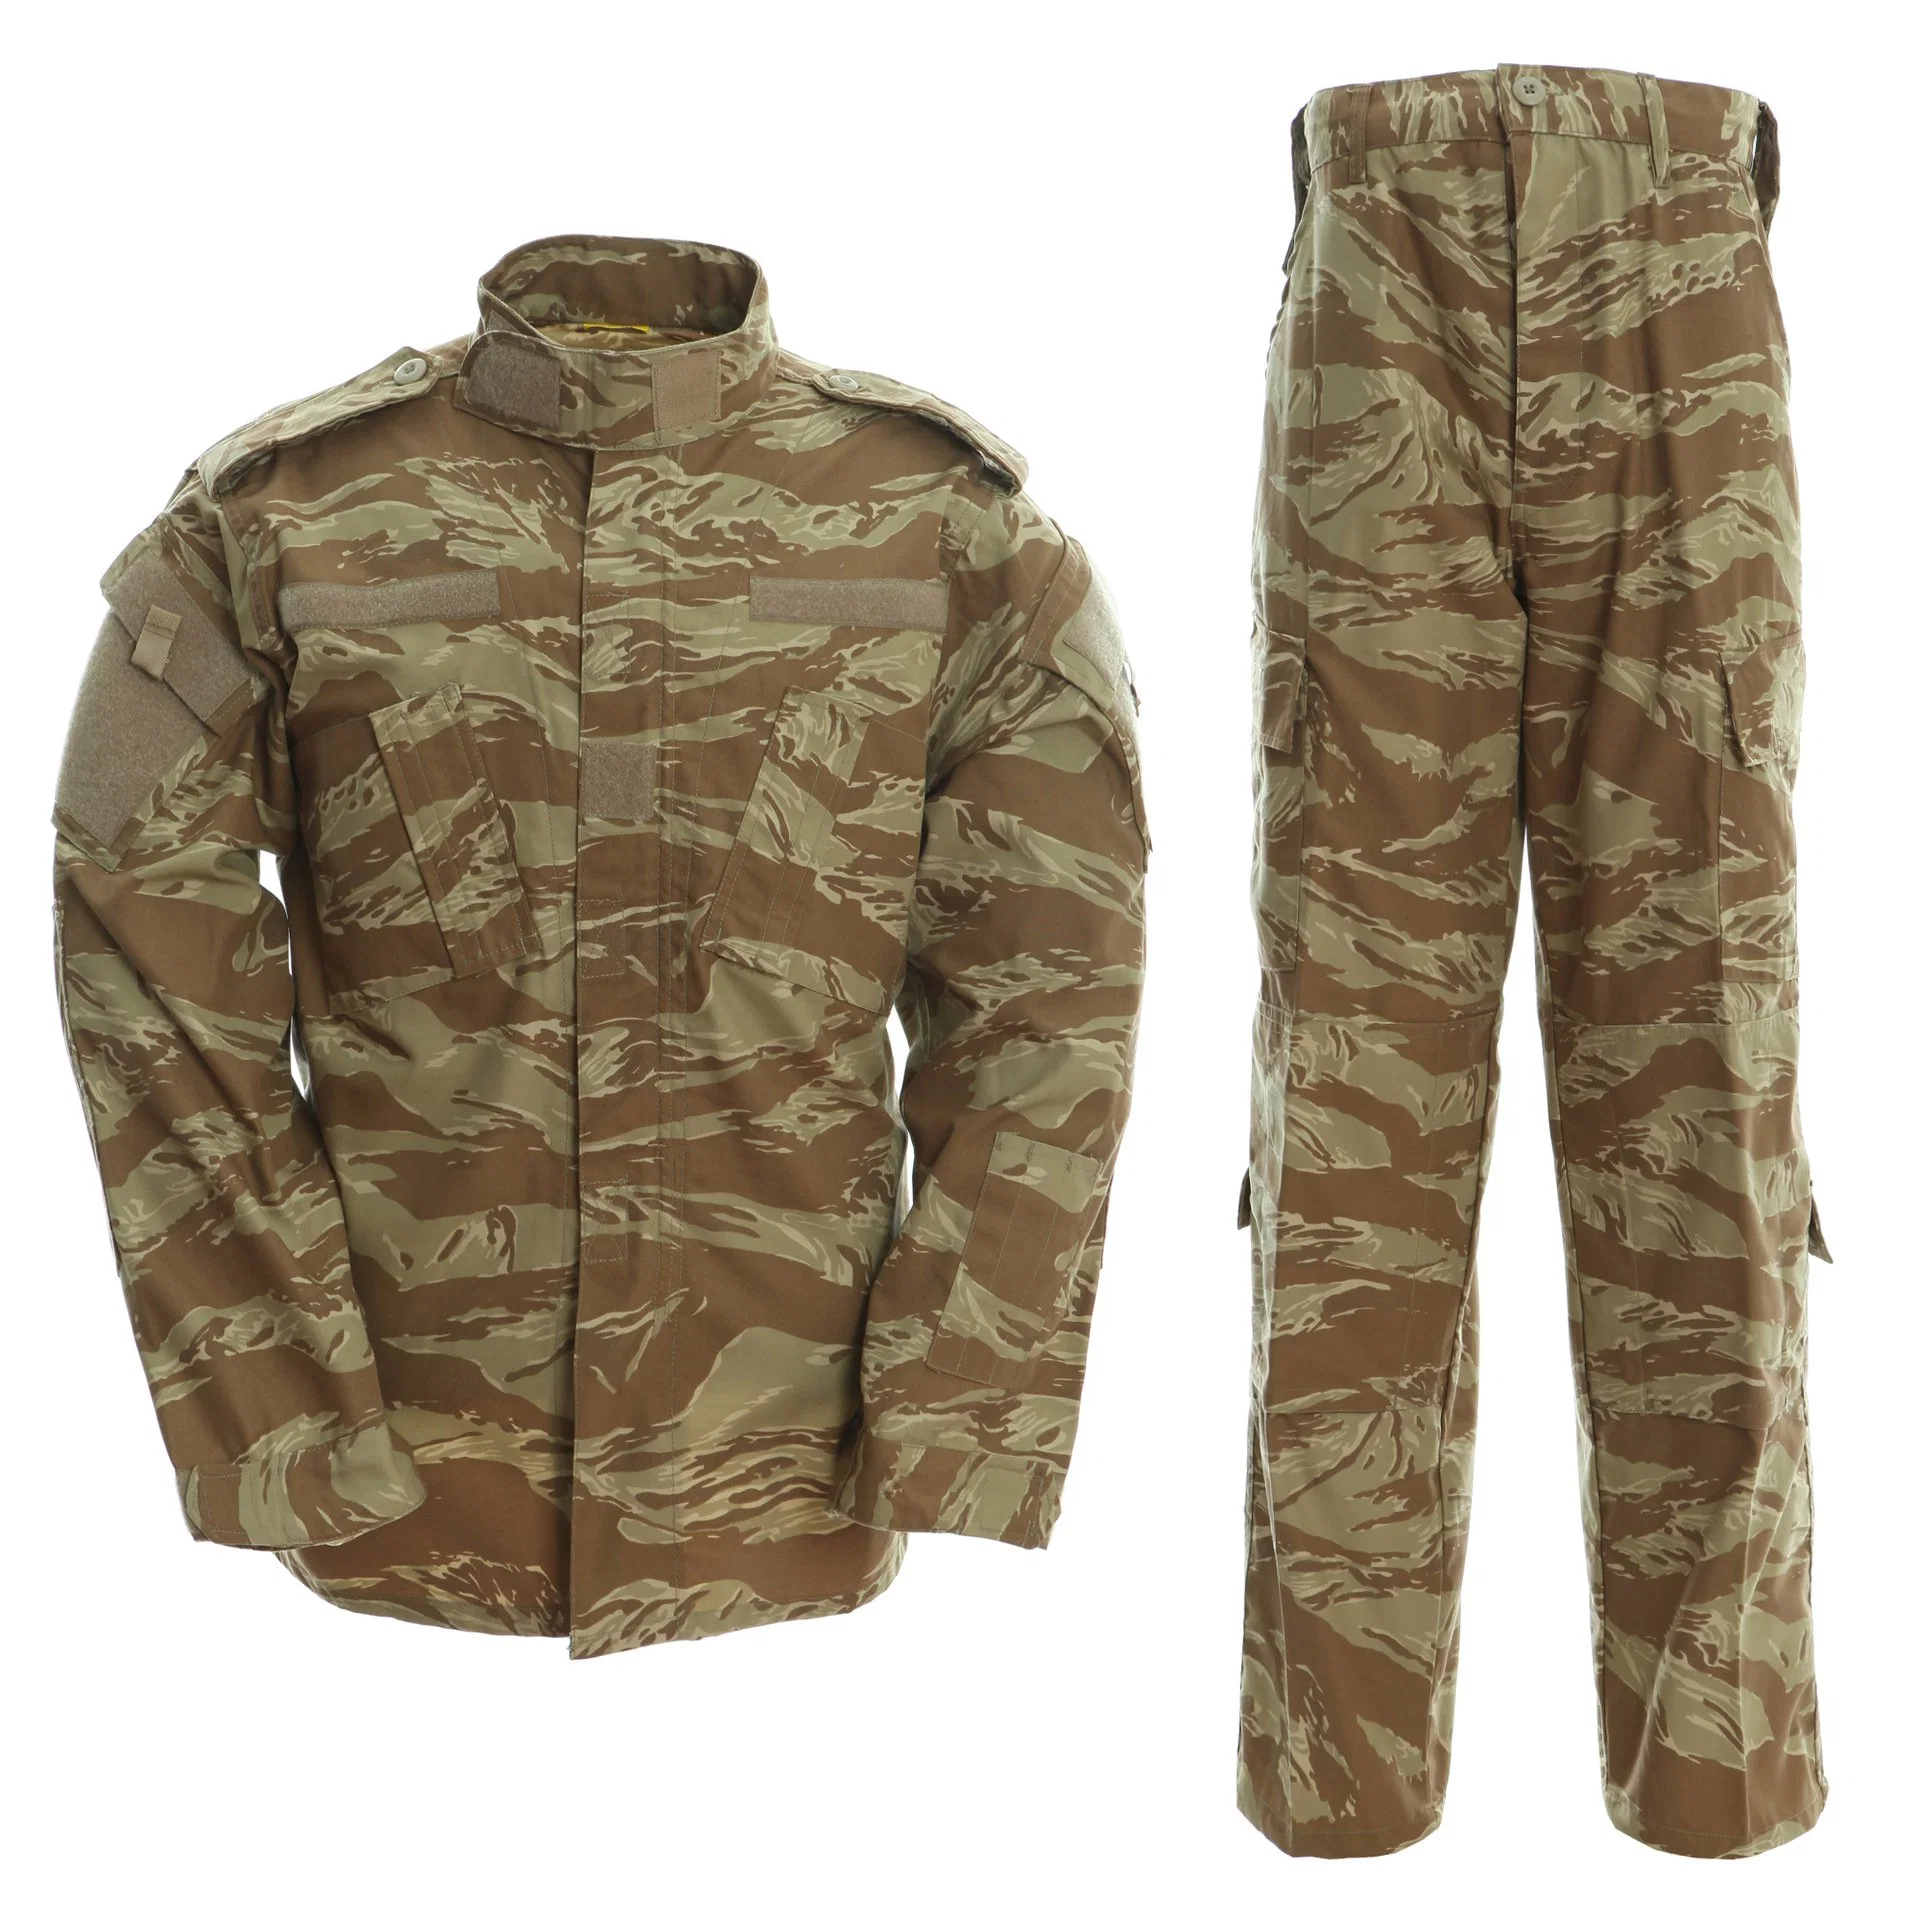 Military Army Acu Camouflage Uniform Training Uniform